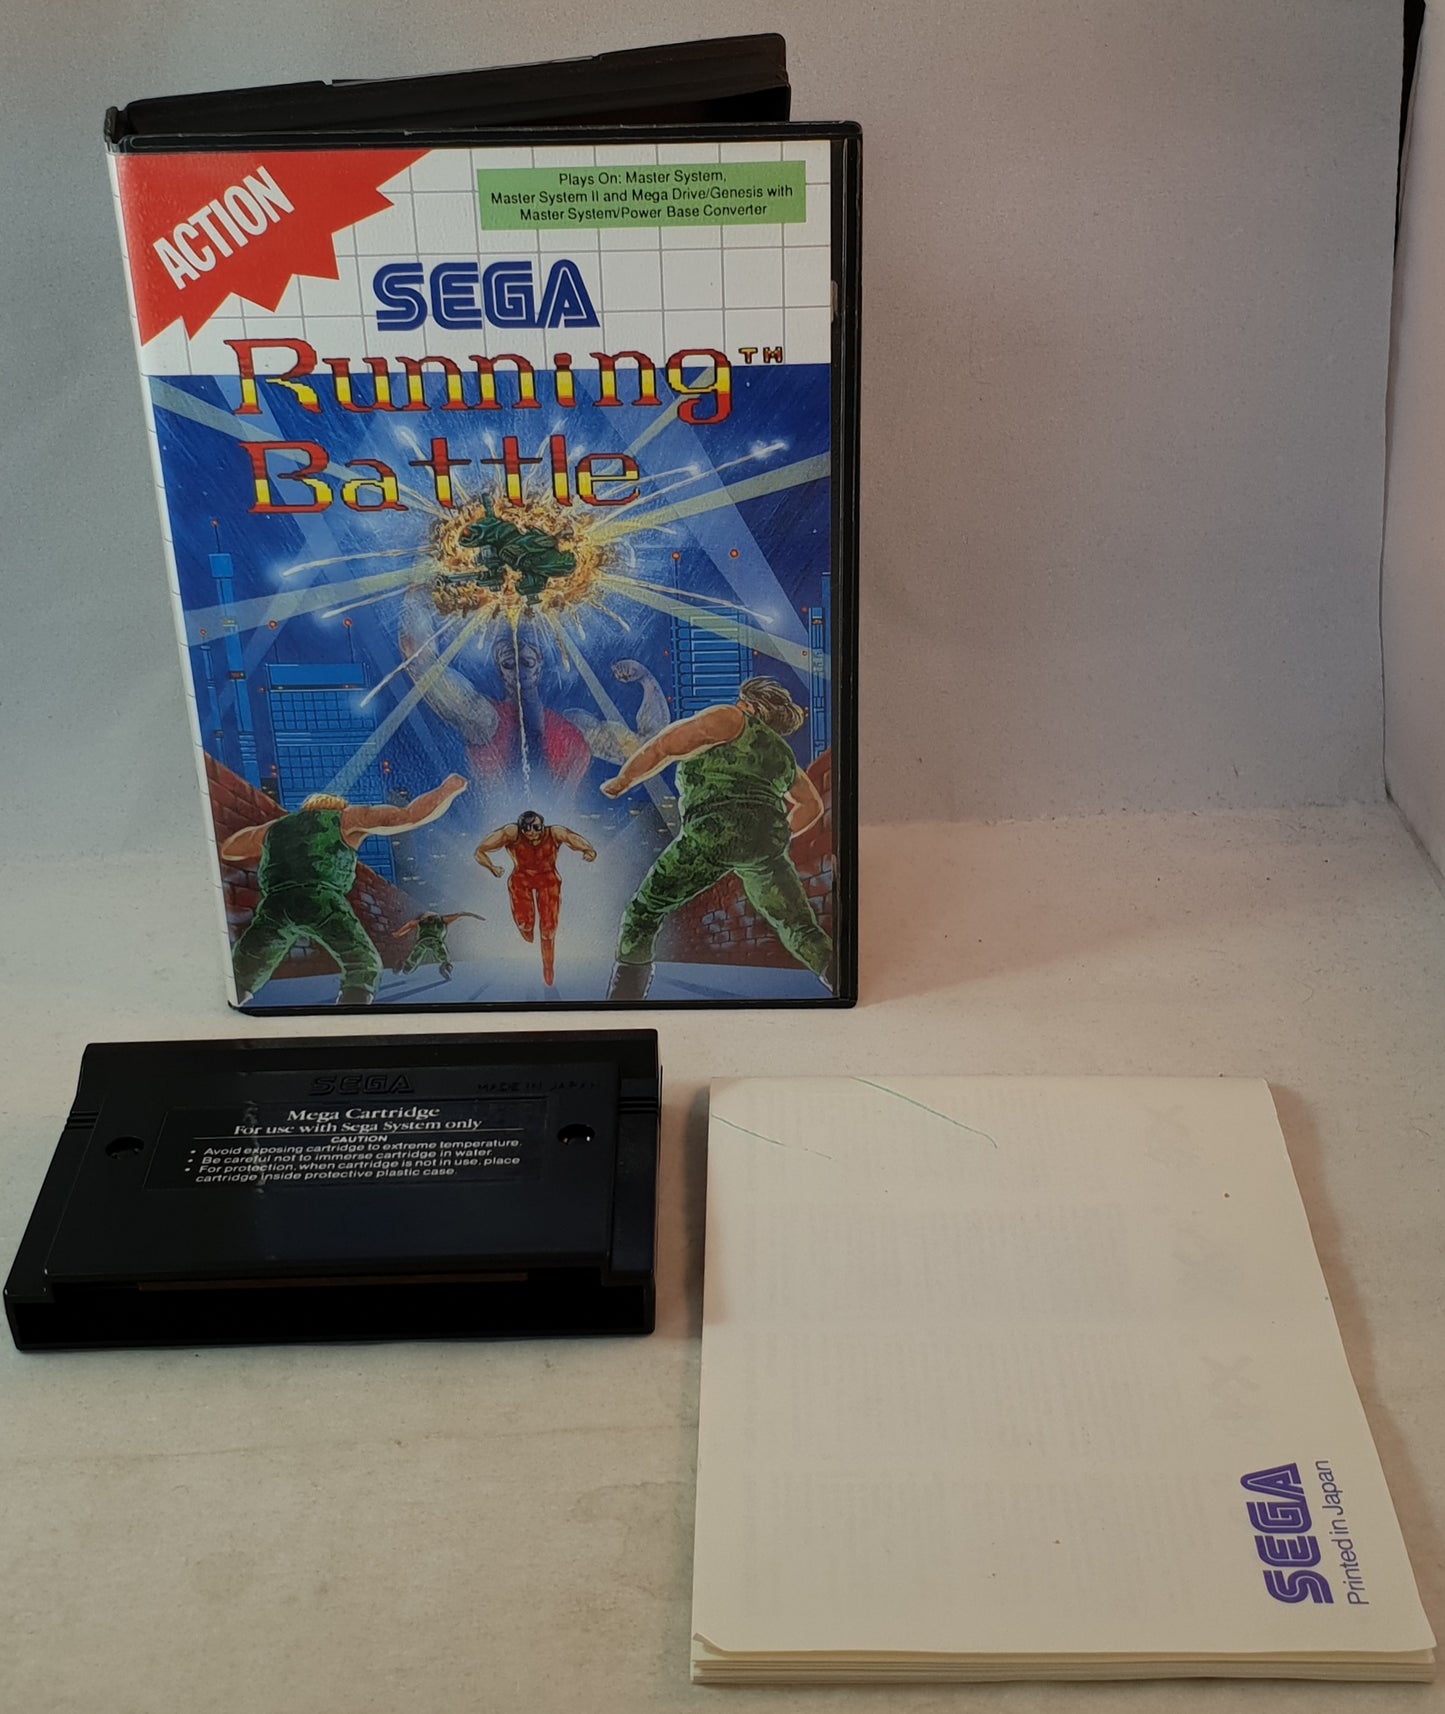 Running Battle Sega Master System Game